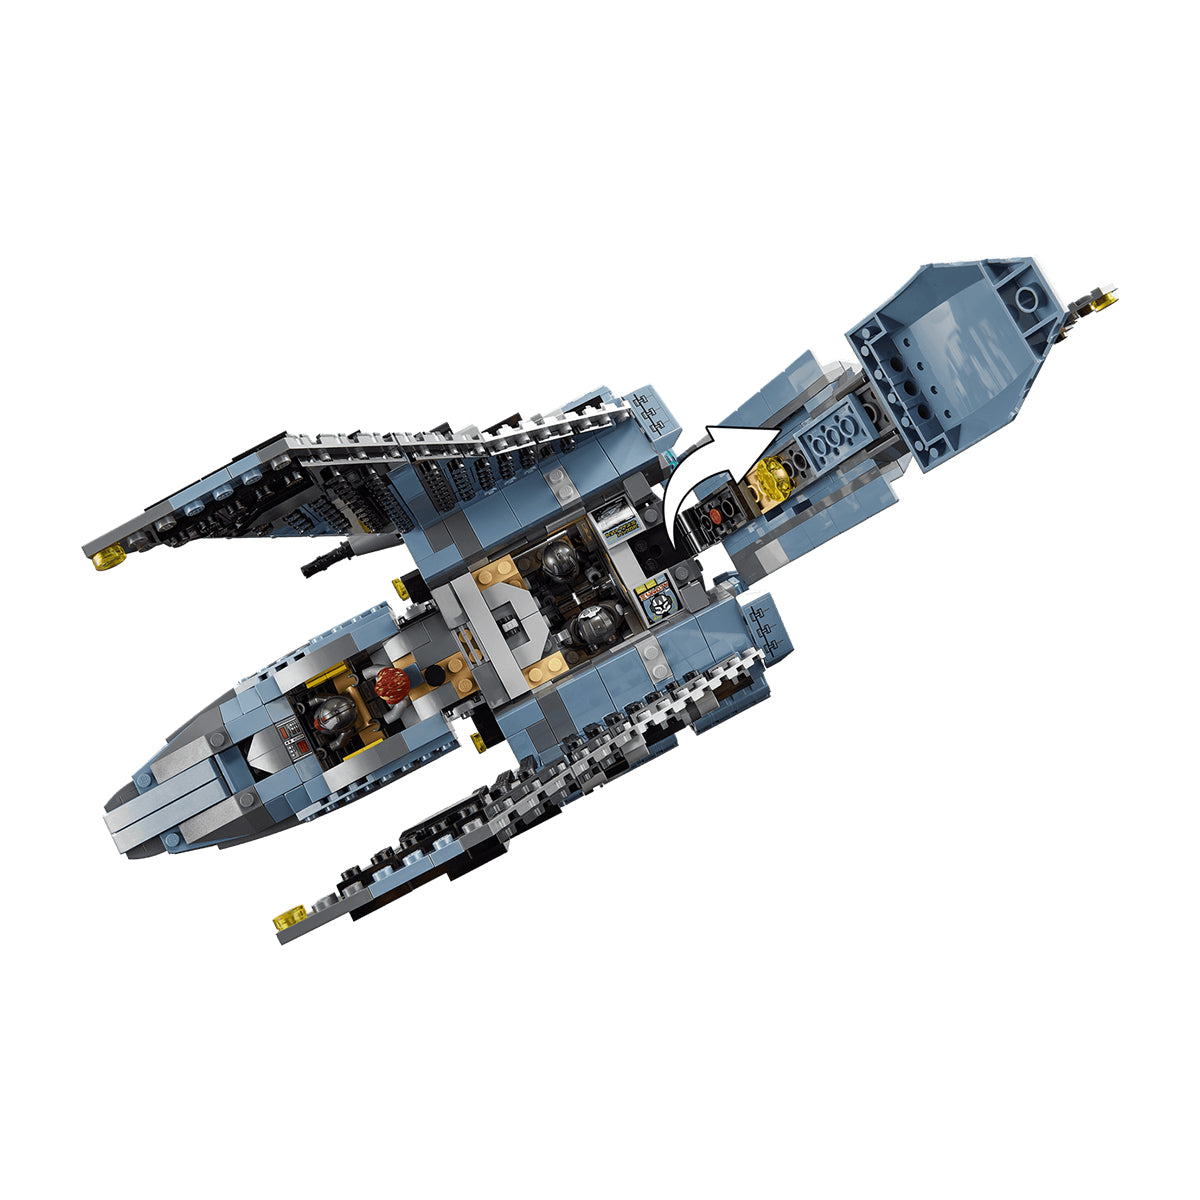 LEGO Star Wars - The Bad Batch Attack Shuttle 75314